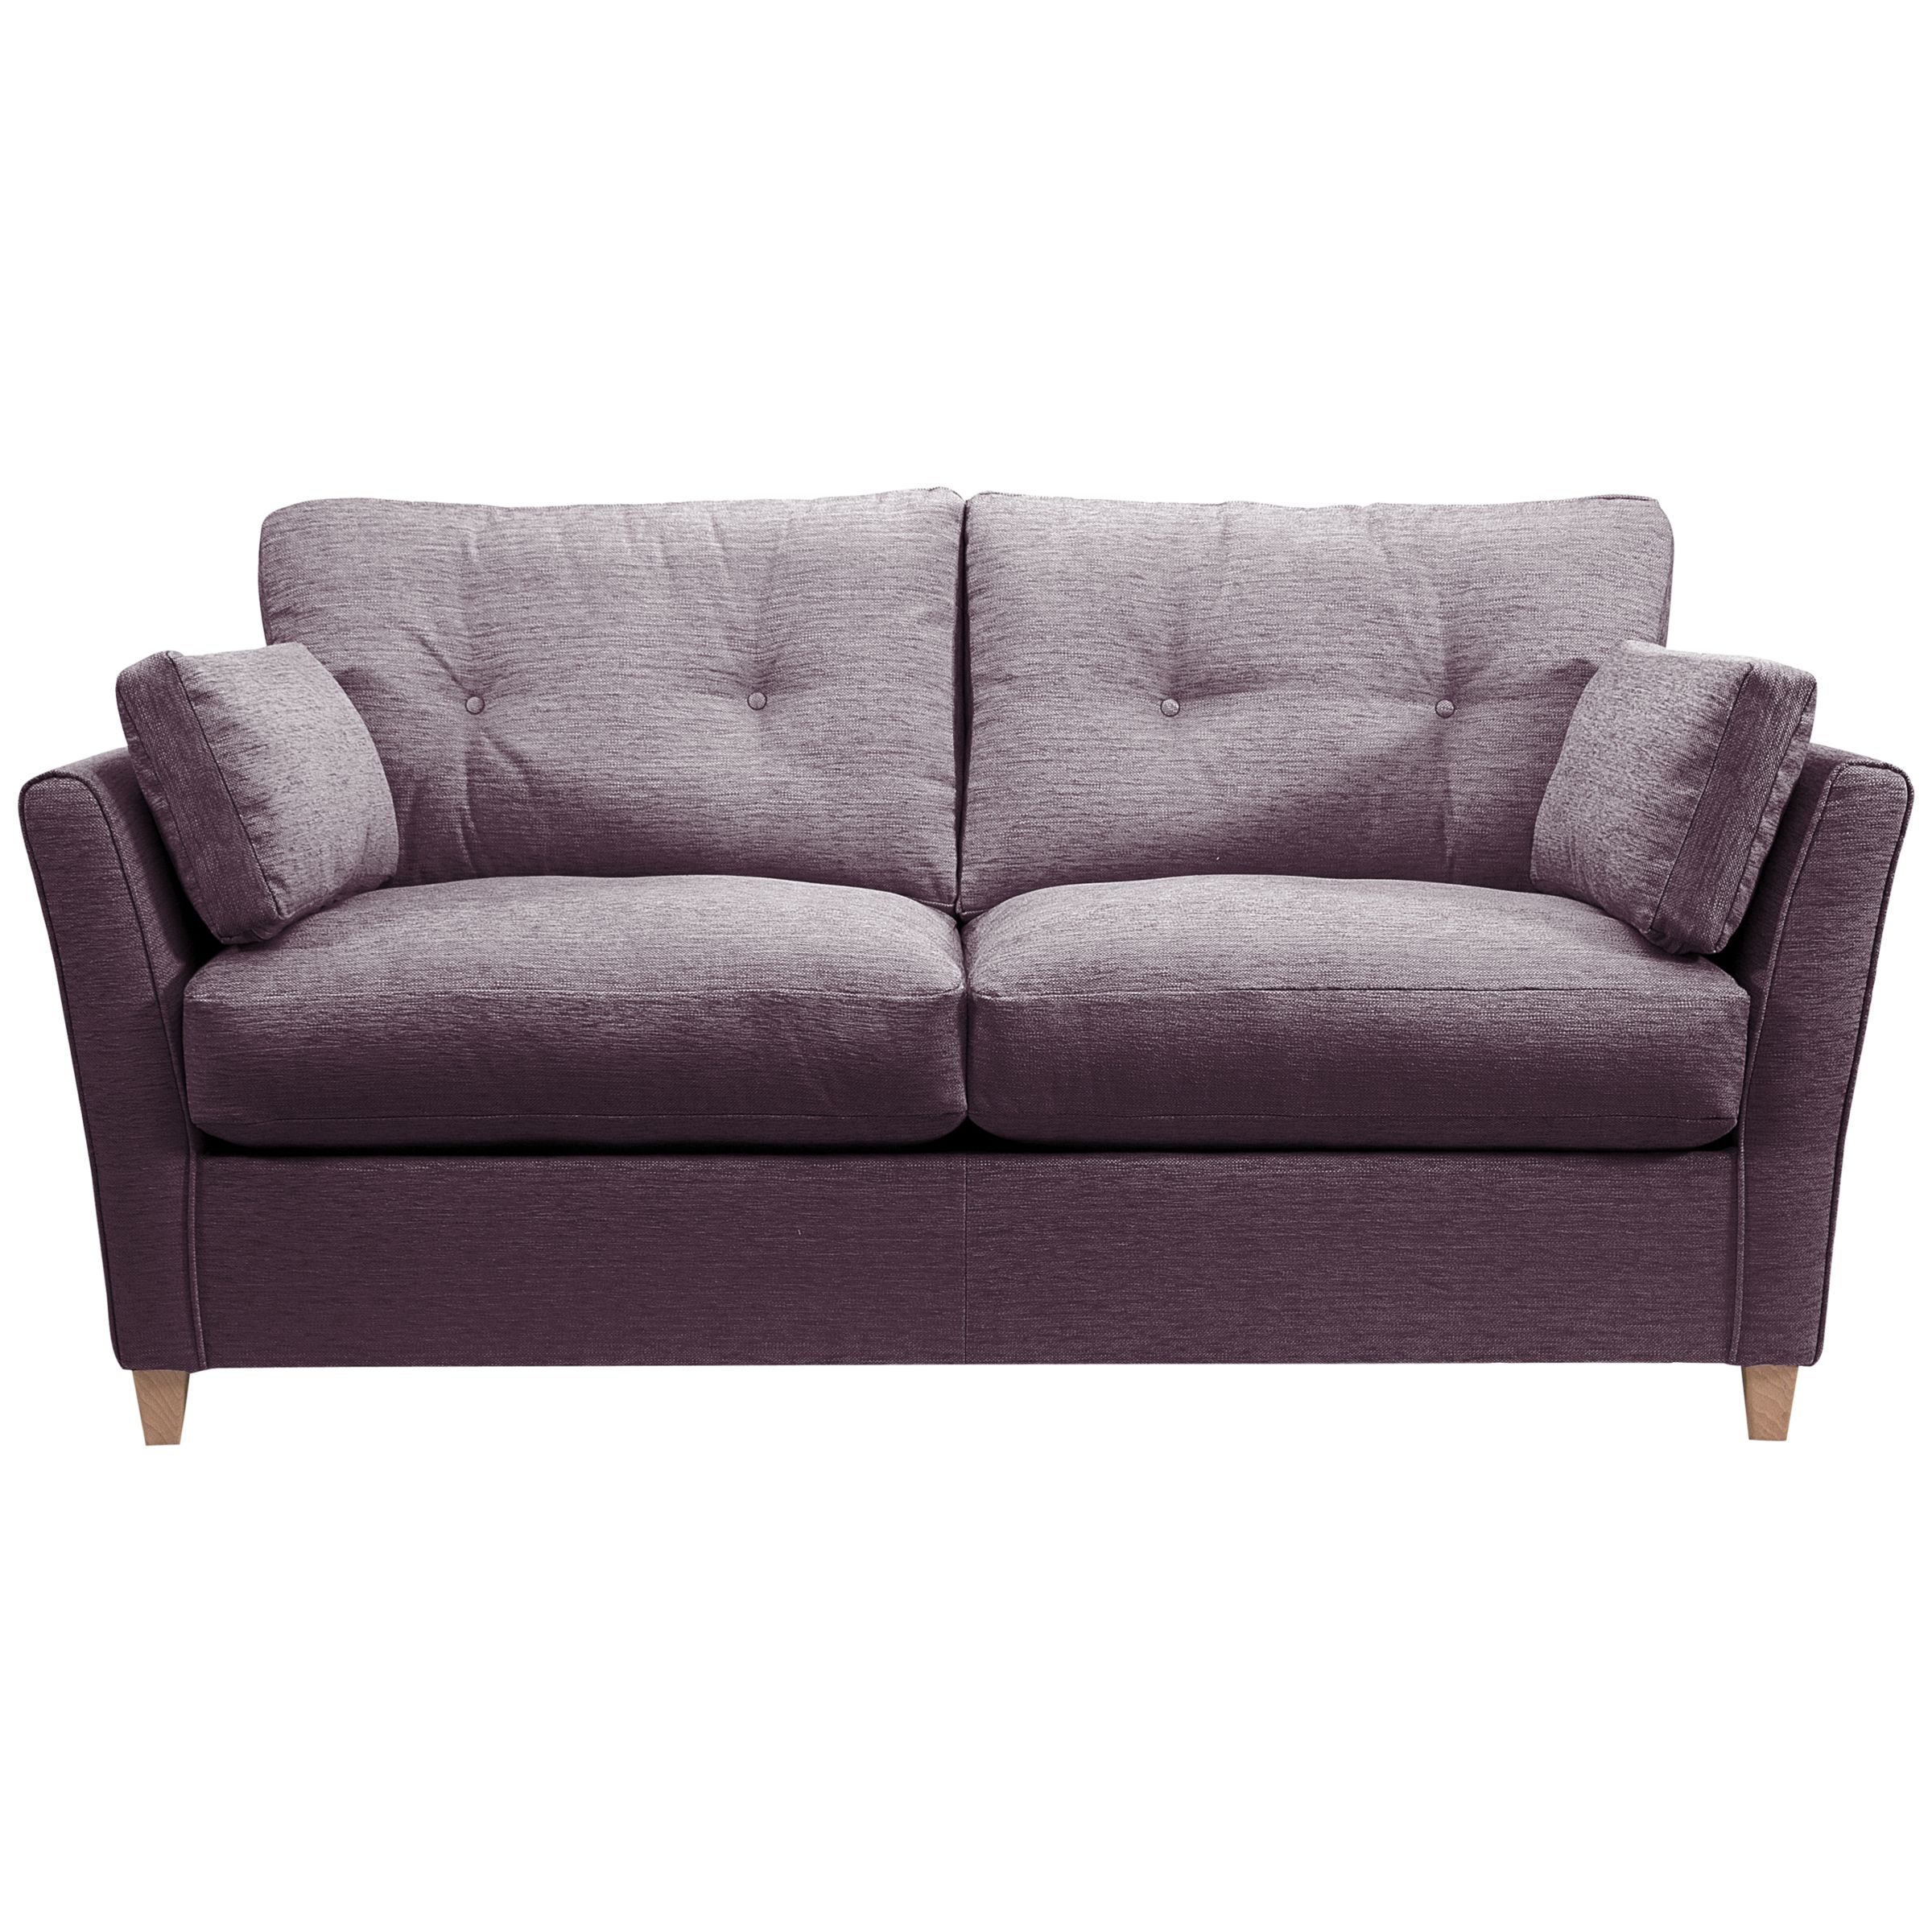 John Lewis Chopin Medium Sofa, Damson, width 184cm